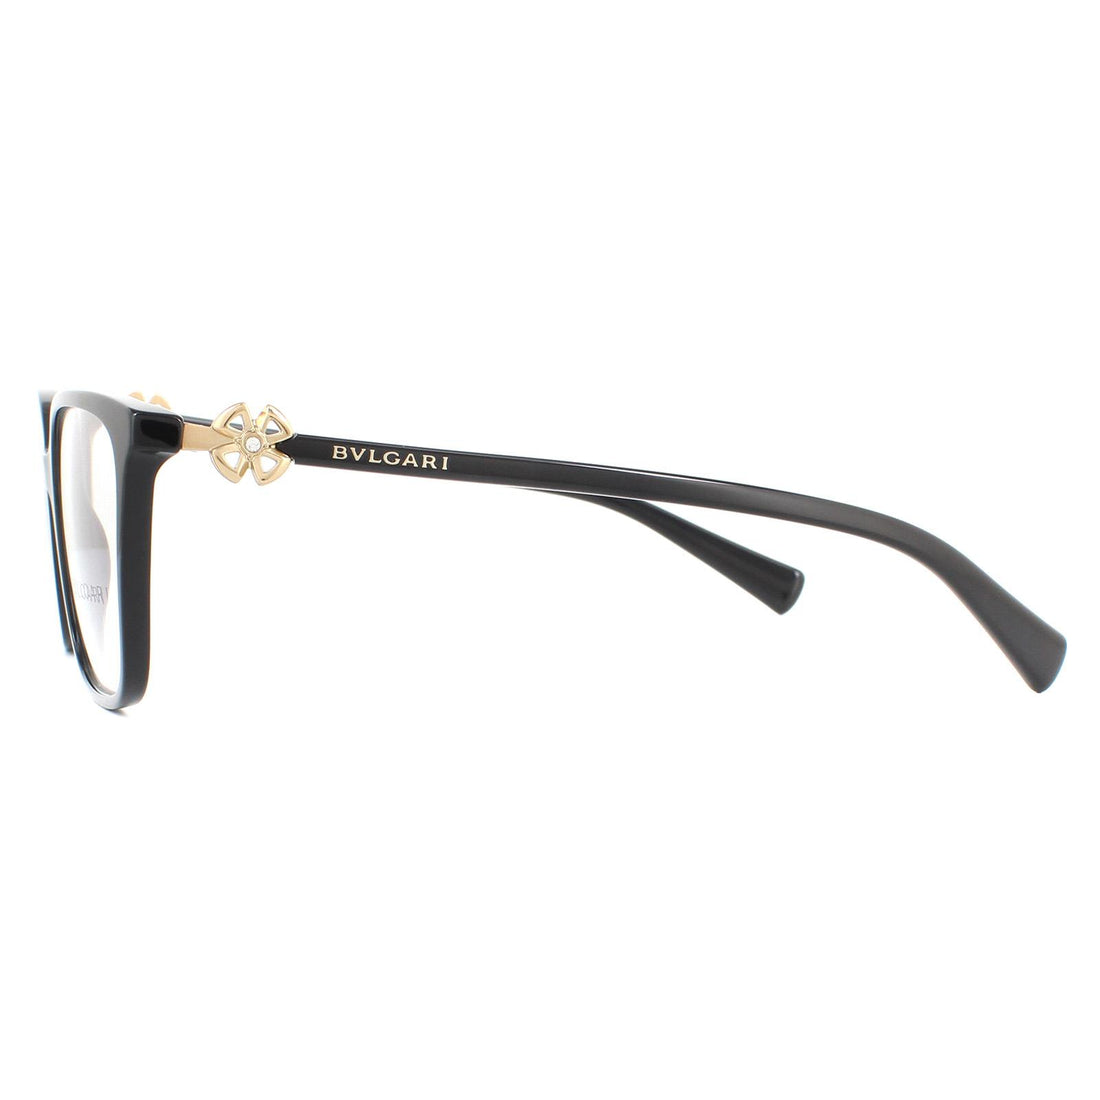 Bvlgari Glasses Frames BV4197B 501 Black Women